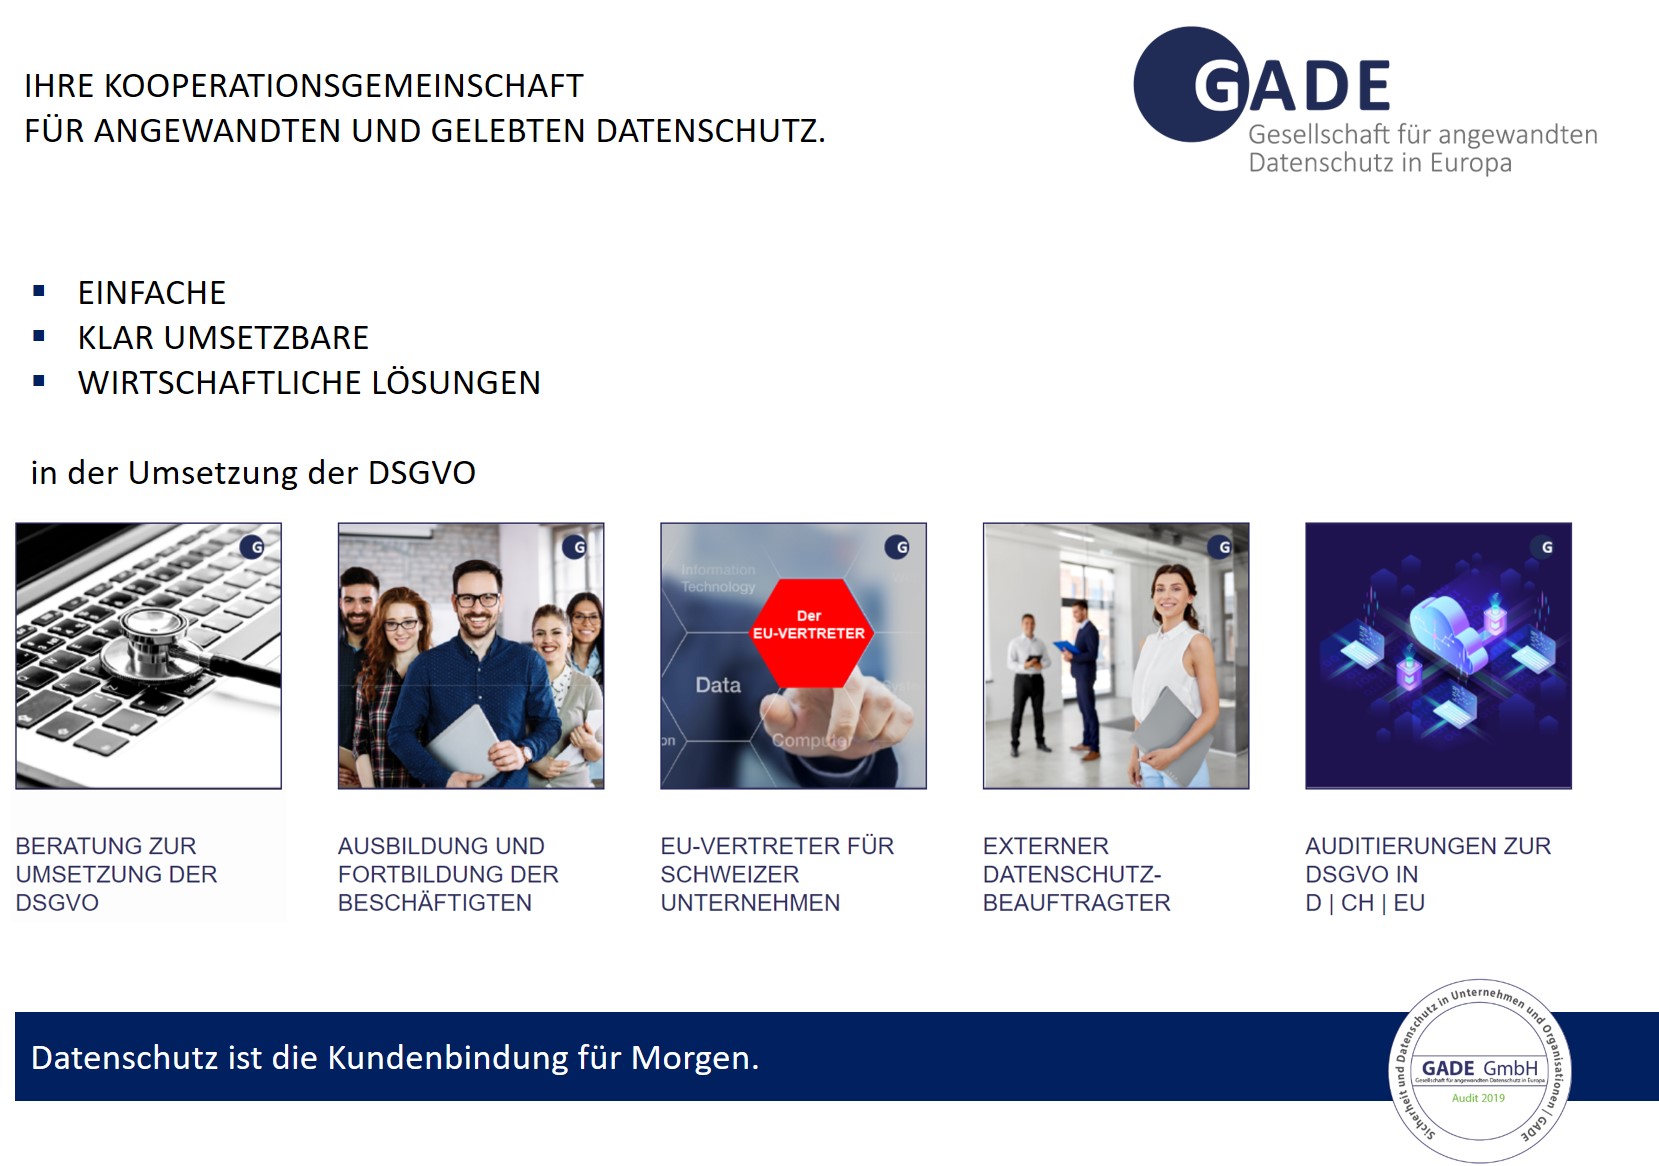 GADE GmbH